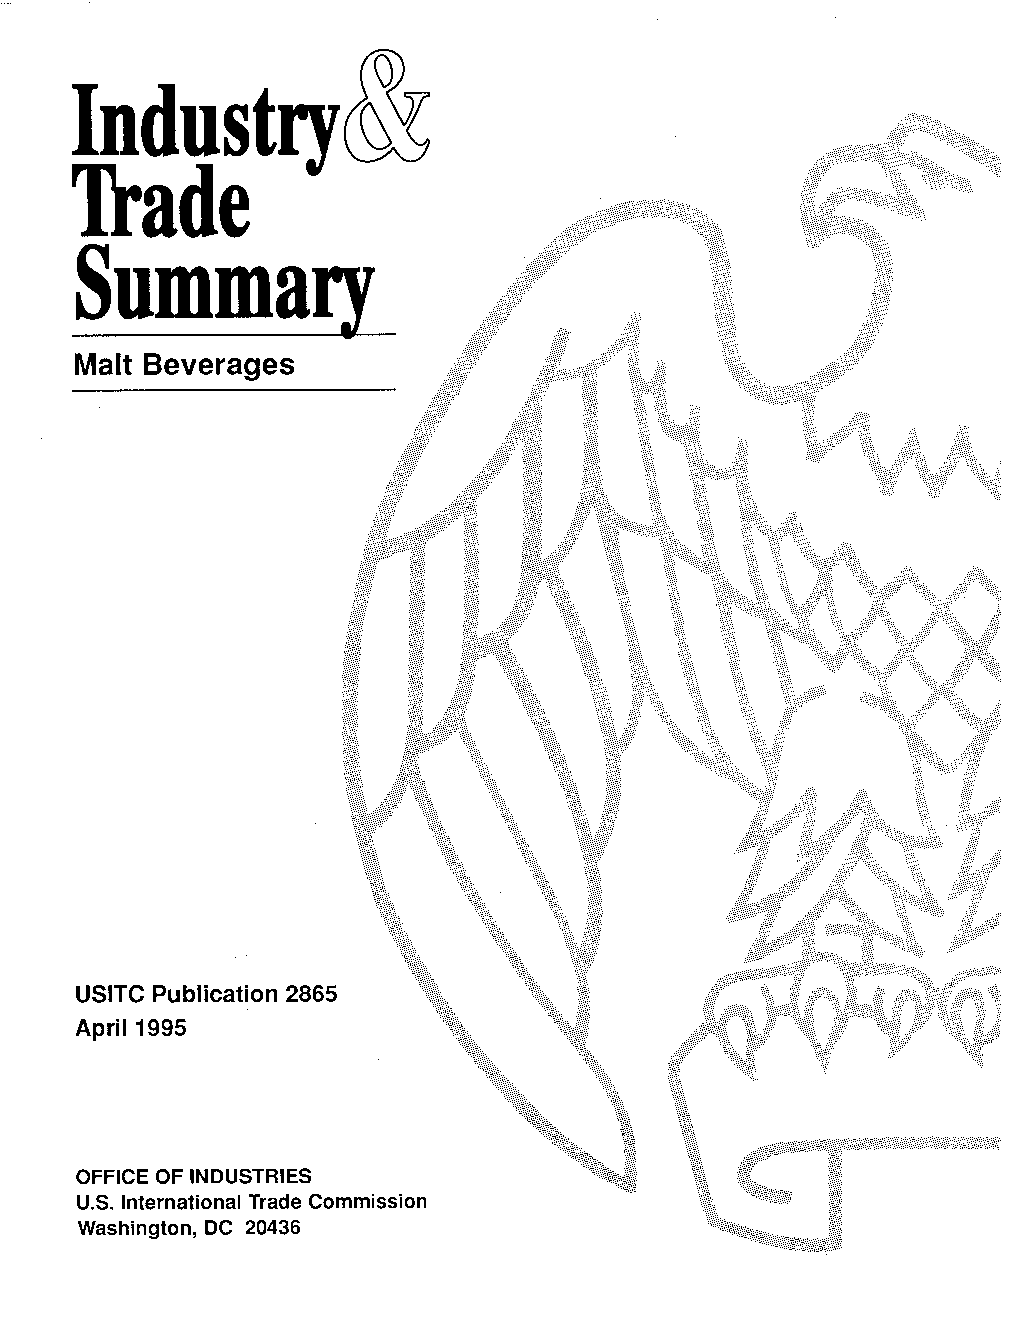 Industry & Trade Summary